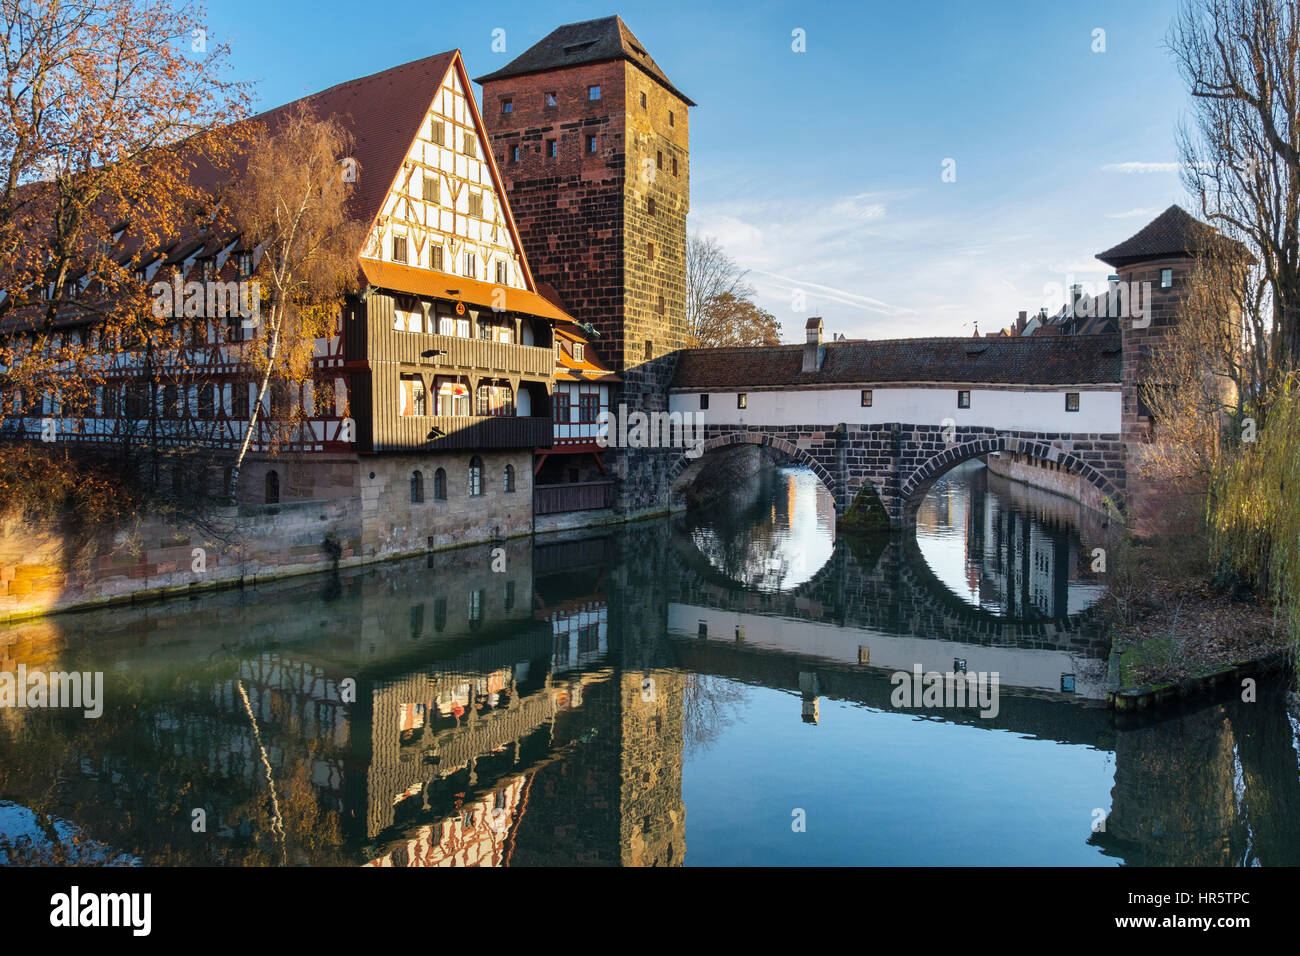 15th century old Weinstadle timbered building and Henkersteg or Hangman's Bridge reflected in Pegnitz River in Nuremberg (Nurnberg), Bavaria, Germany Stock Photo